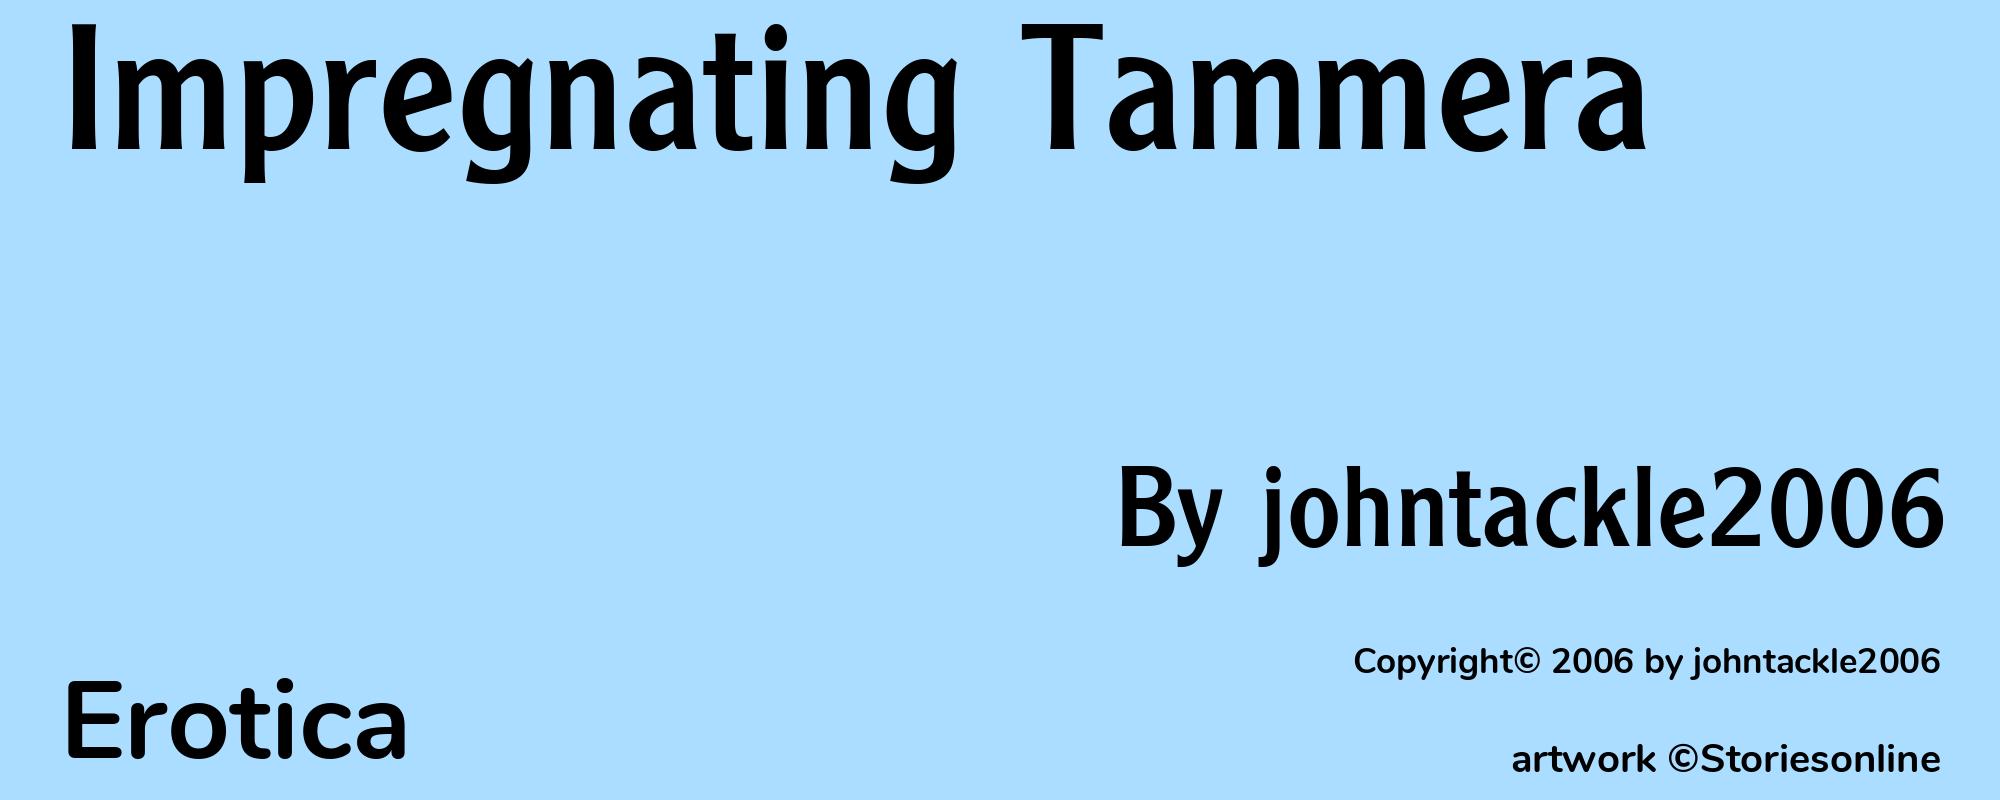 Impregnating Tammera - Cover